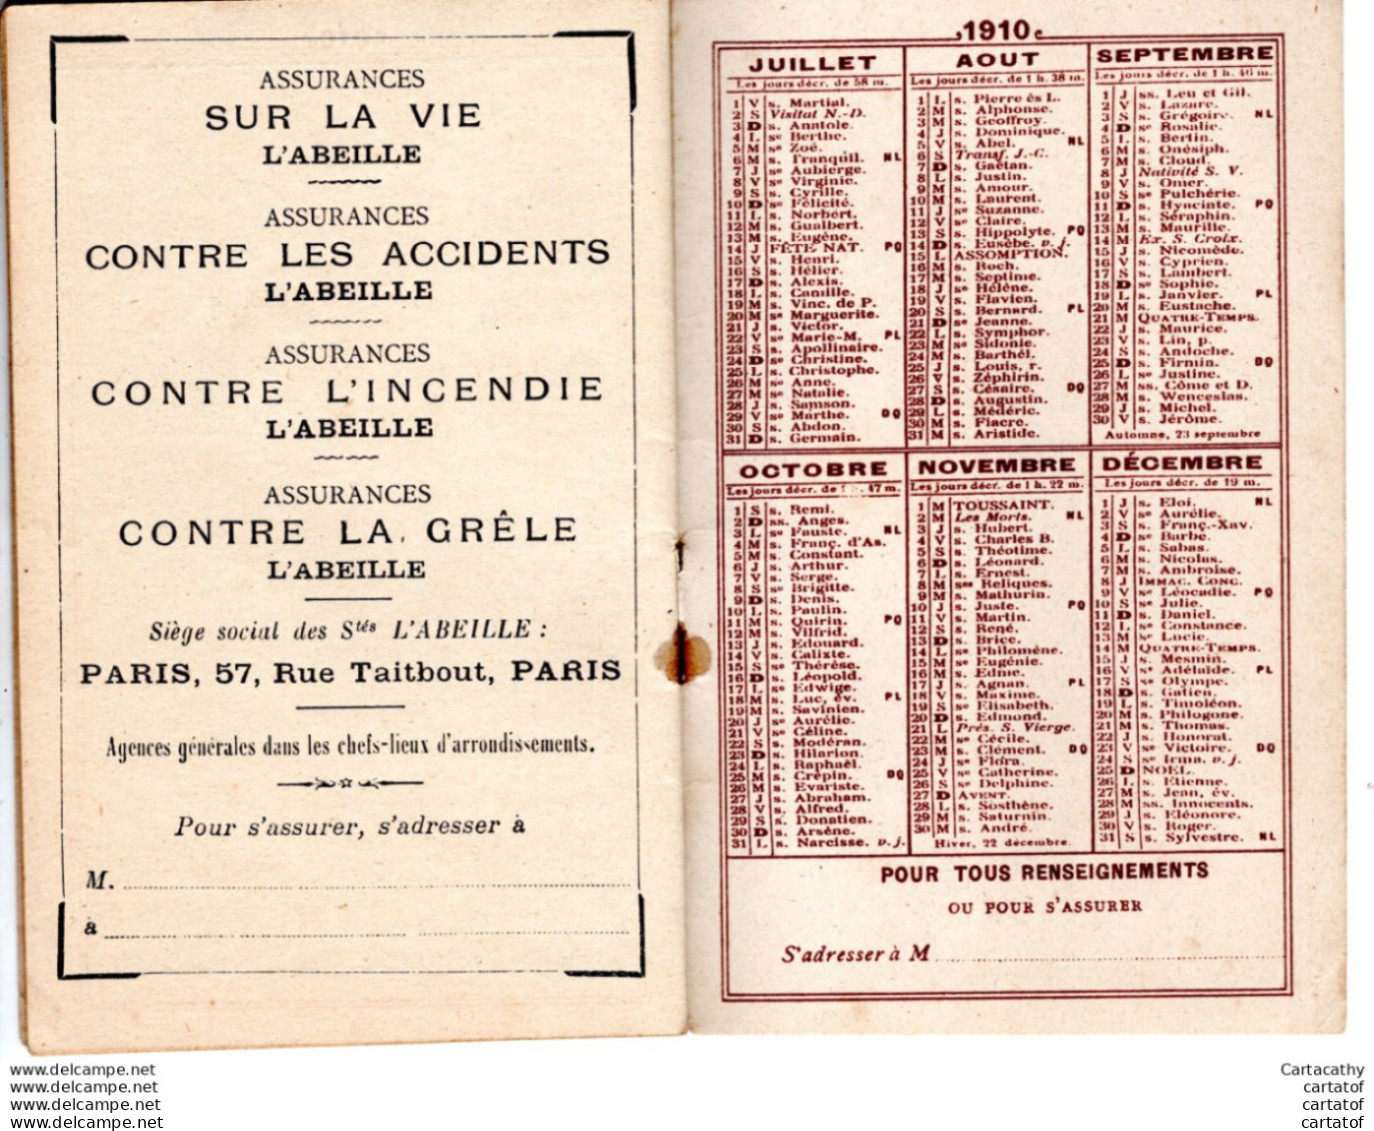 AGENDA 1910 Offert Par L'ABEILLE . - Small : 1901-20